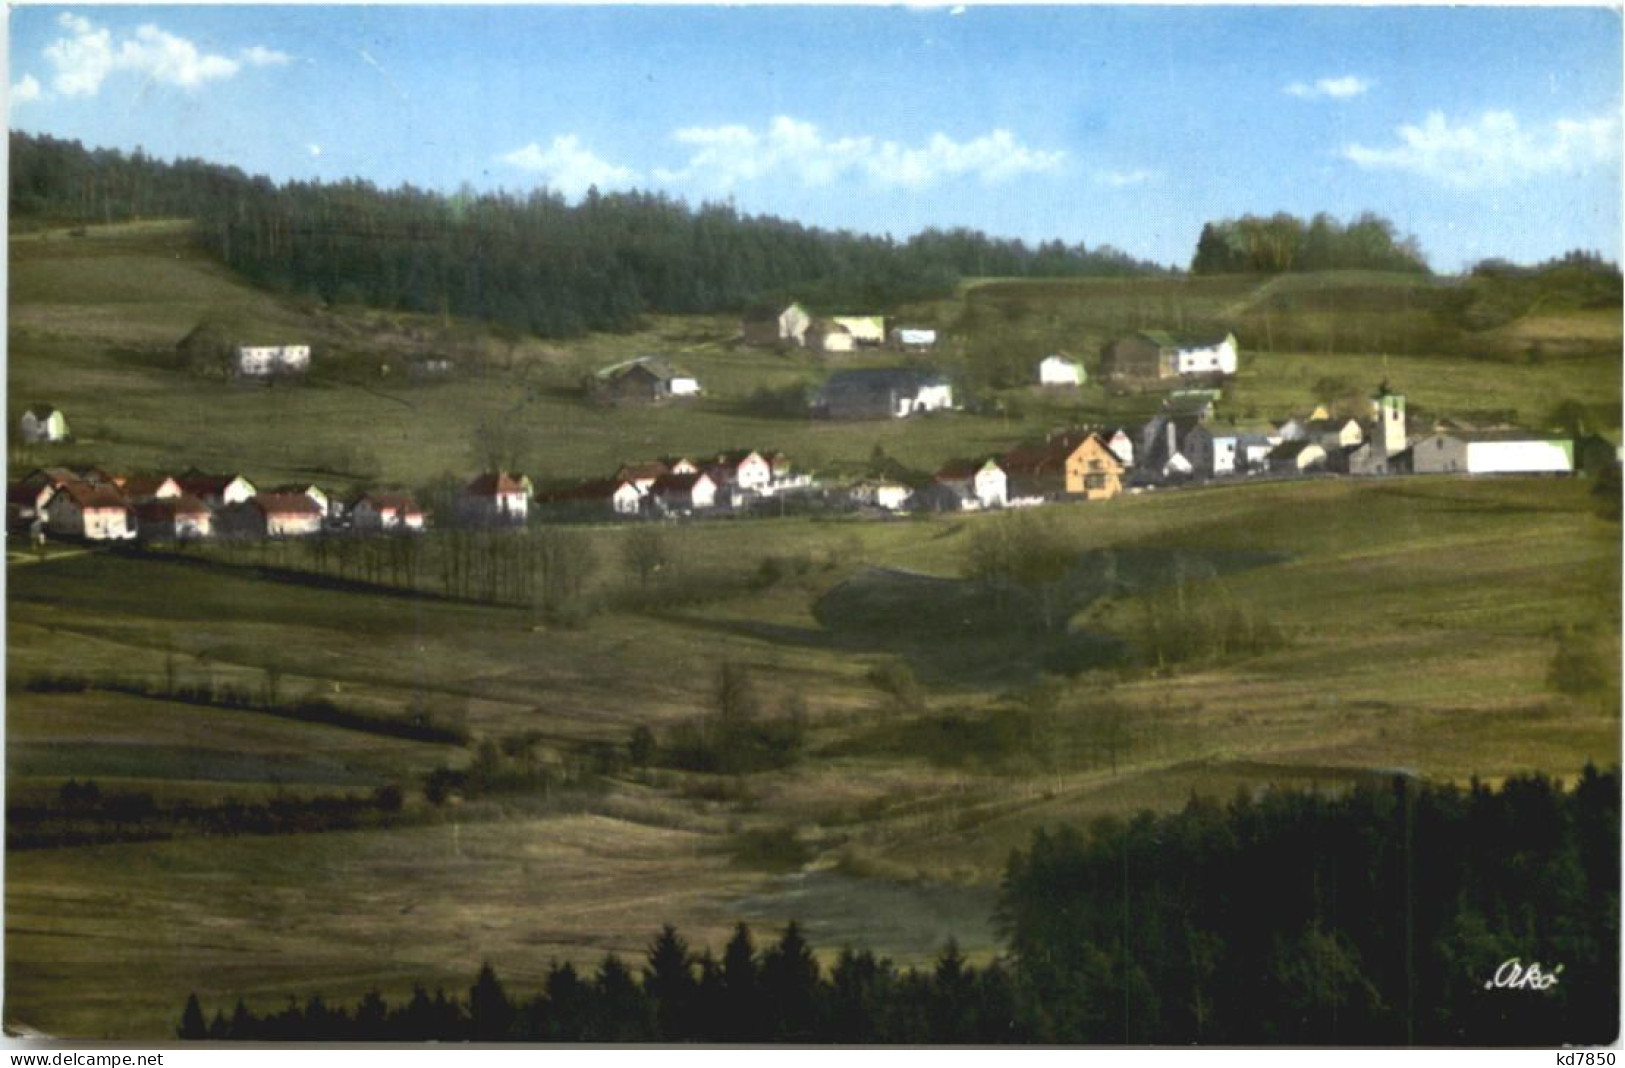 Kaikenried - Gasthof X. Danzer - Teisnach - Regen